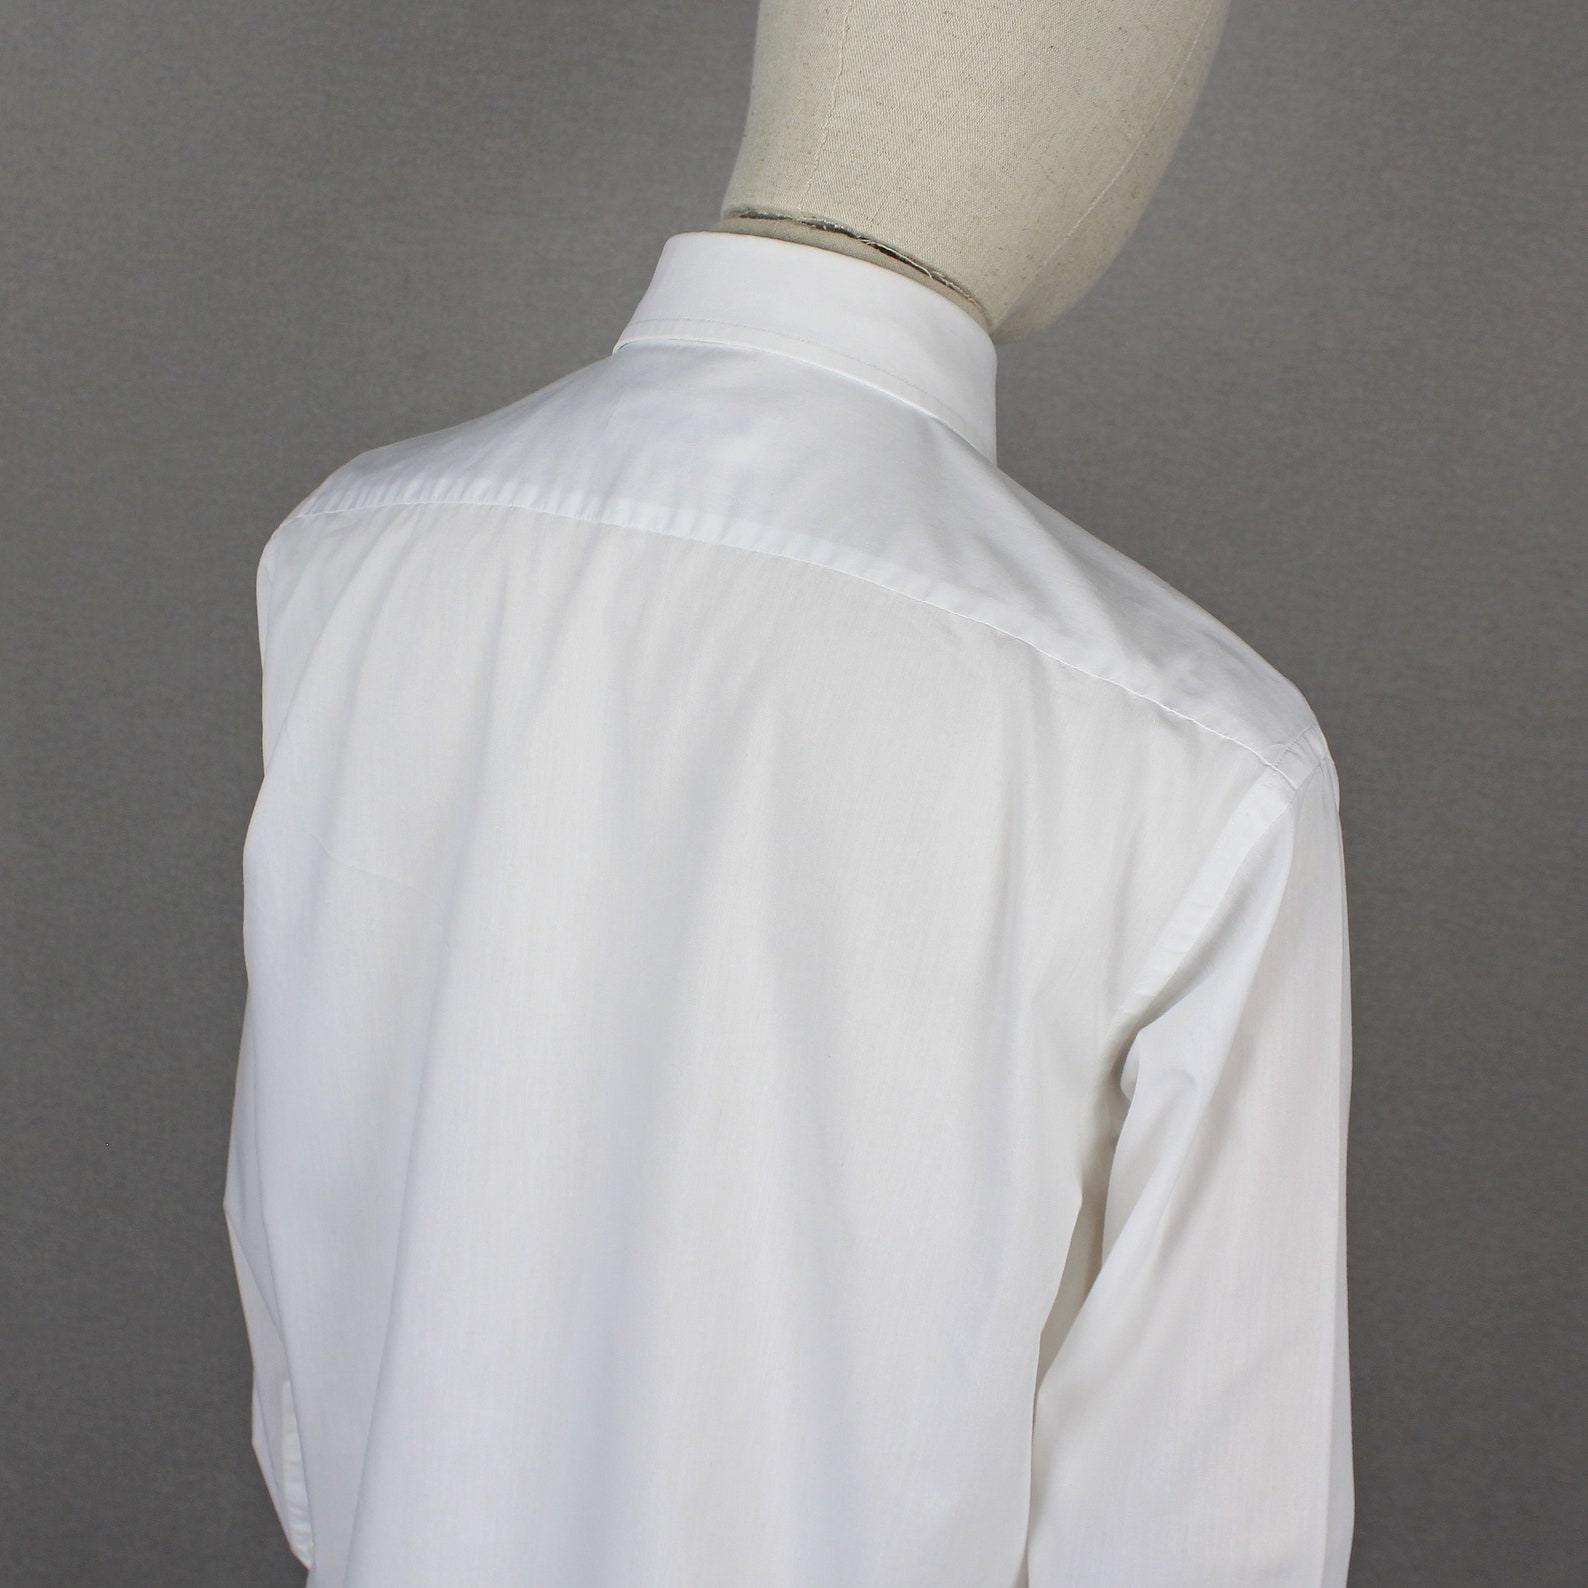 Christian Dior Long Sleeve Shirt Size 15 1/2 39 40 M | Etsy